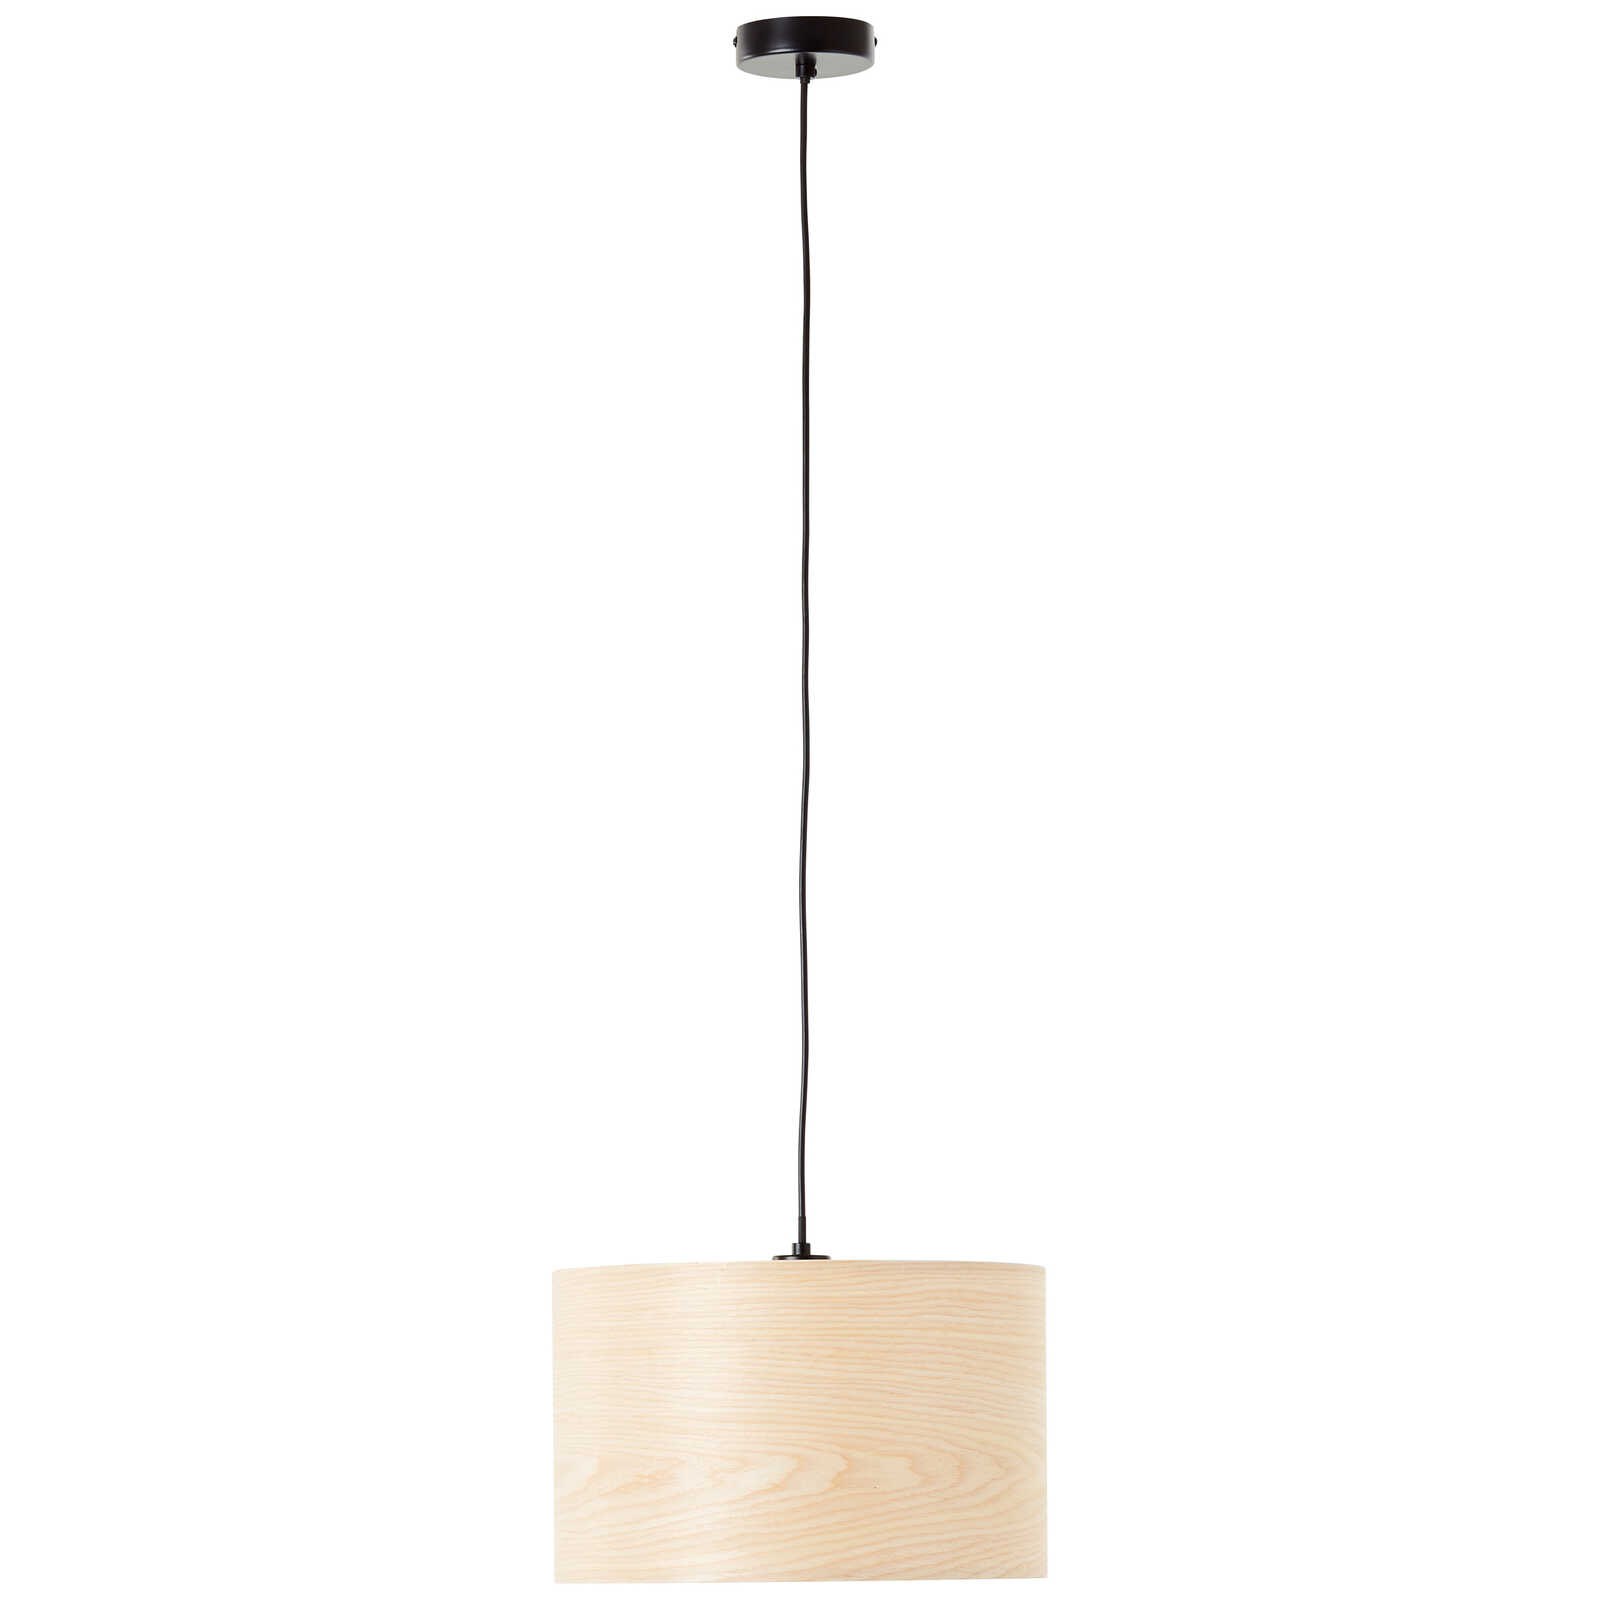             Lámpara colgante de madera - Michael 2 - Beige
        